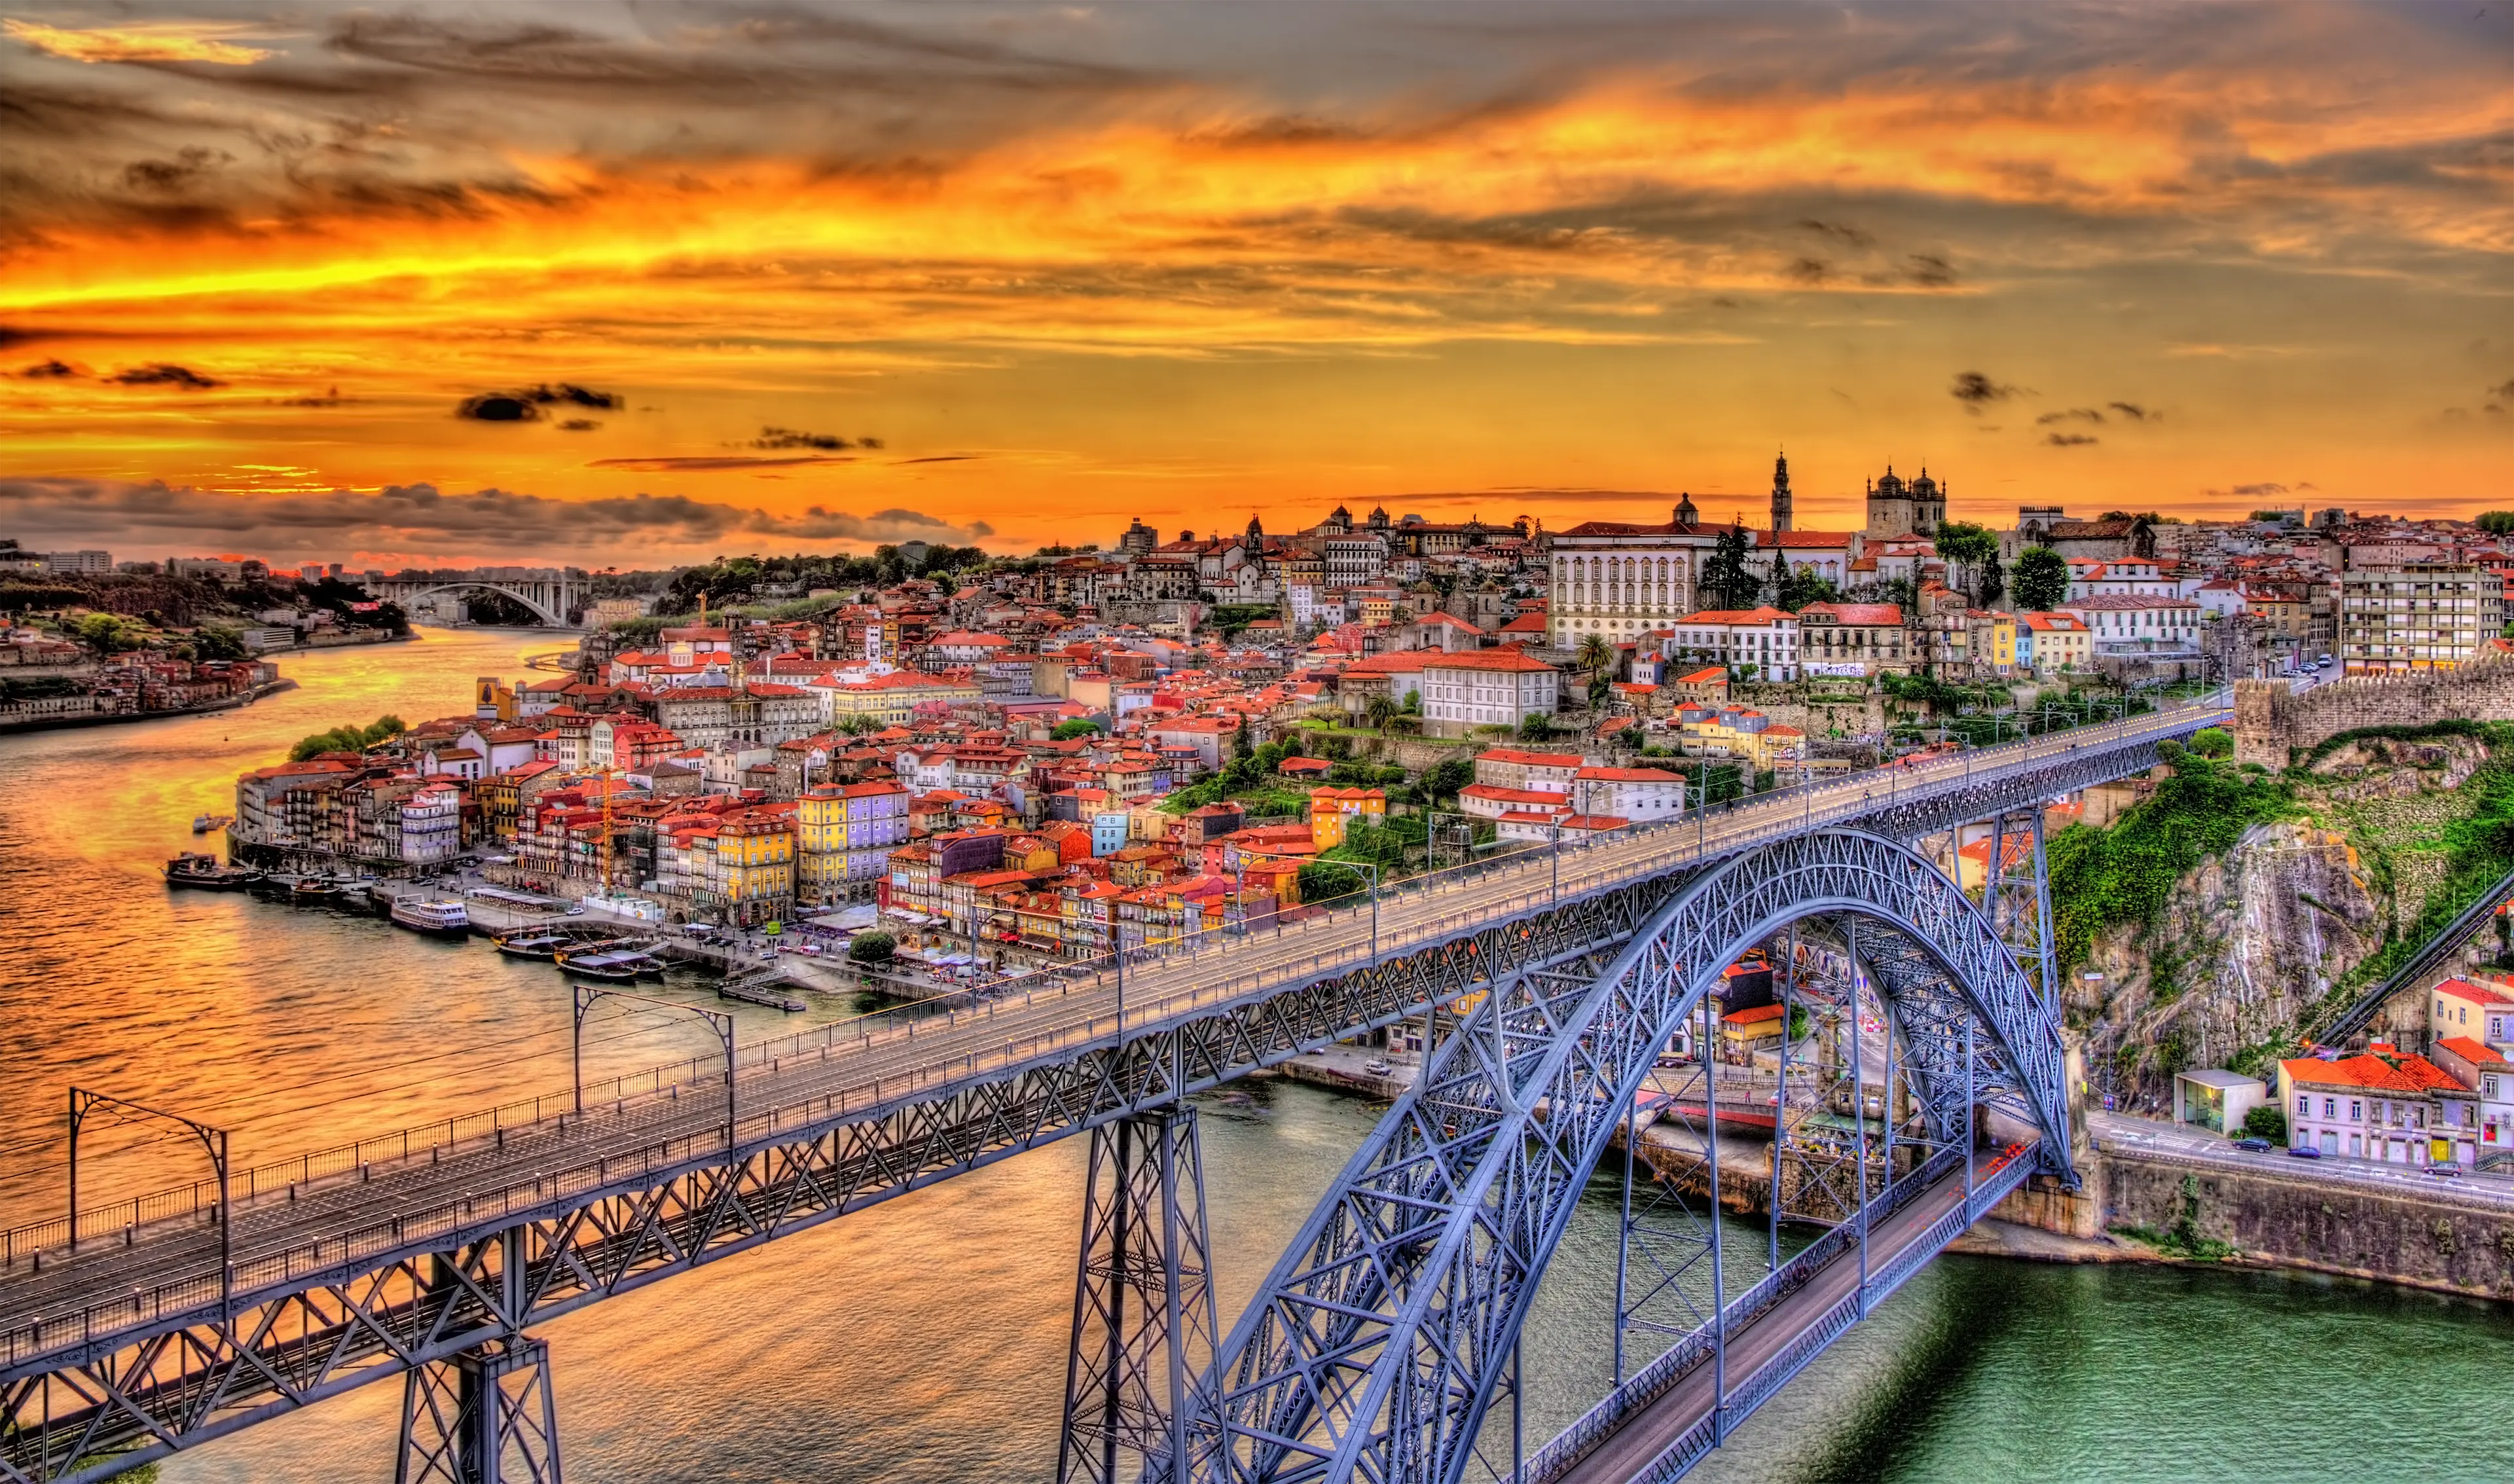 1-Day Family Adventure off Porto's Beaten Path: Relax & Explore